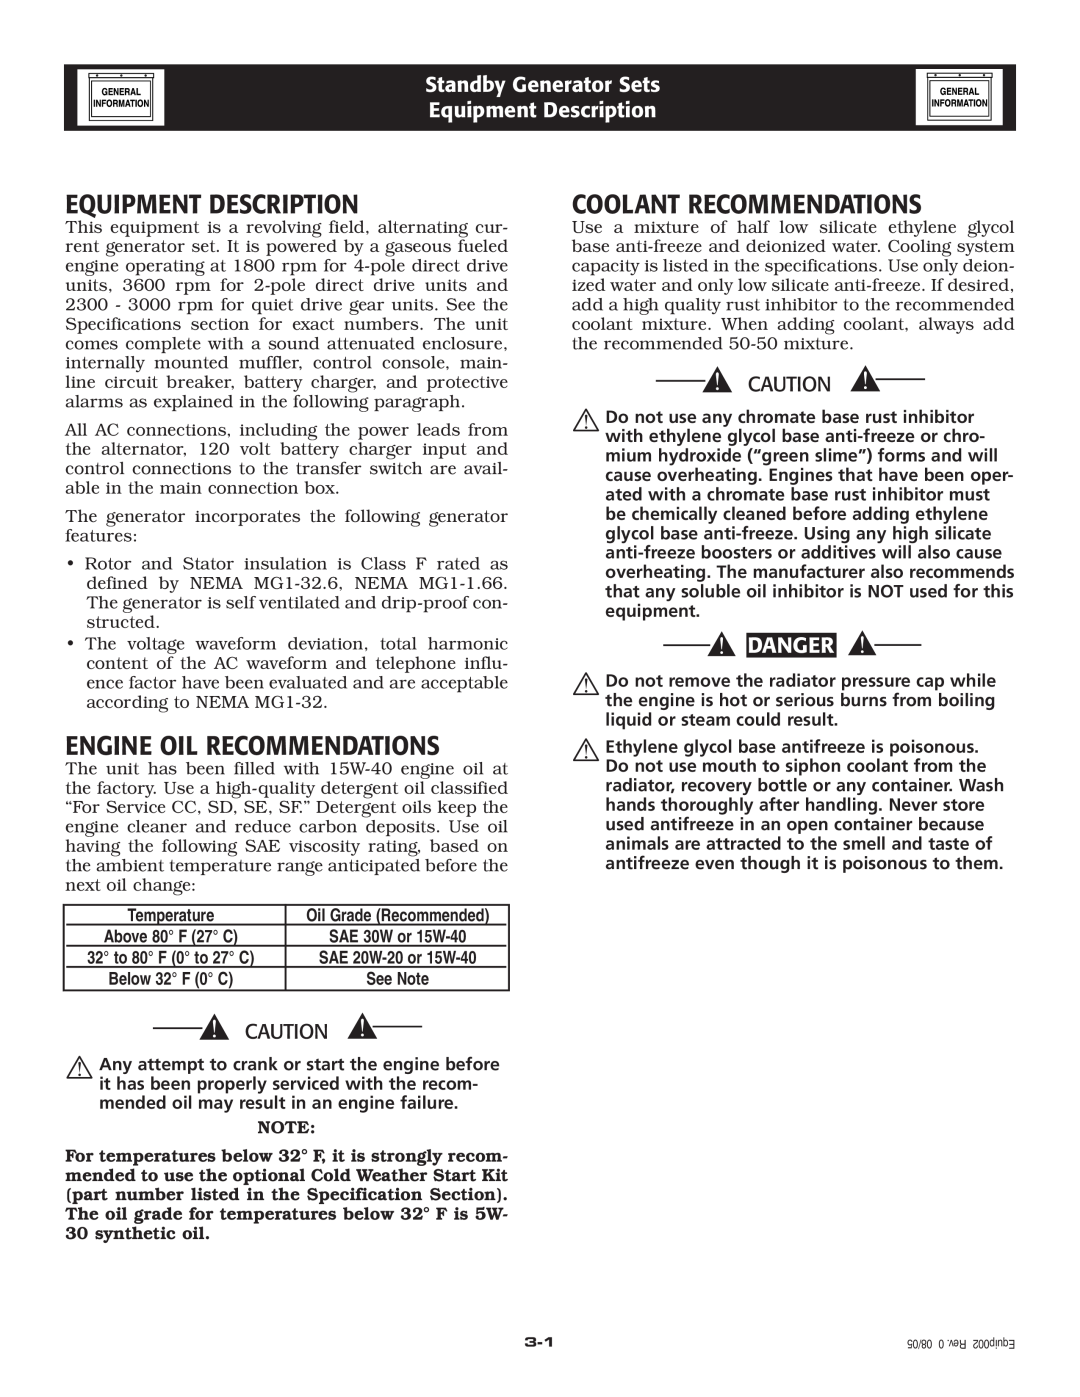 Generac QT owner manual Equipment Description, Engine Oil Recommendations, Coolant Recommendations, Temperature, Danger 